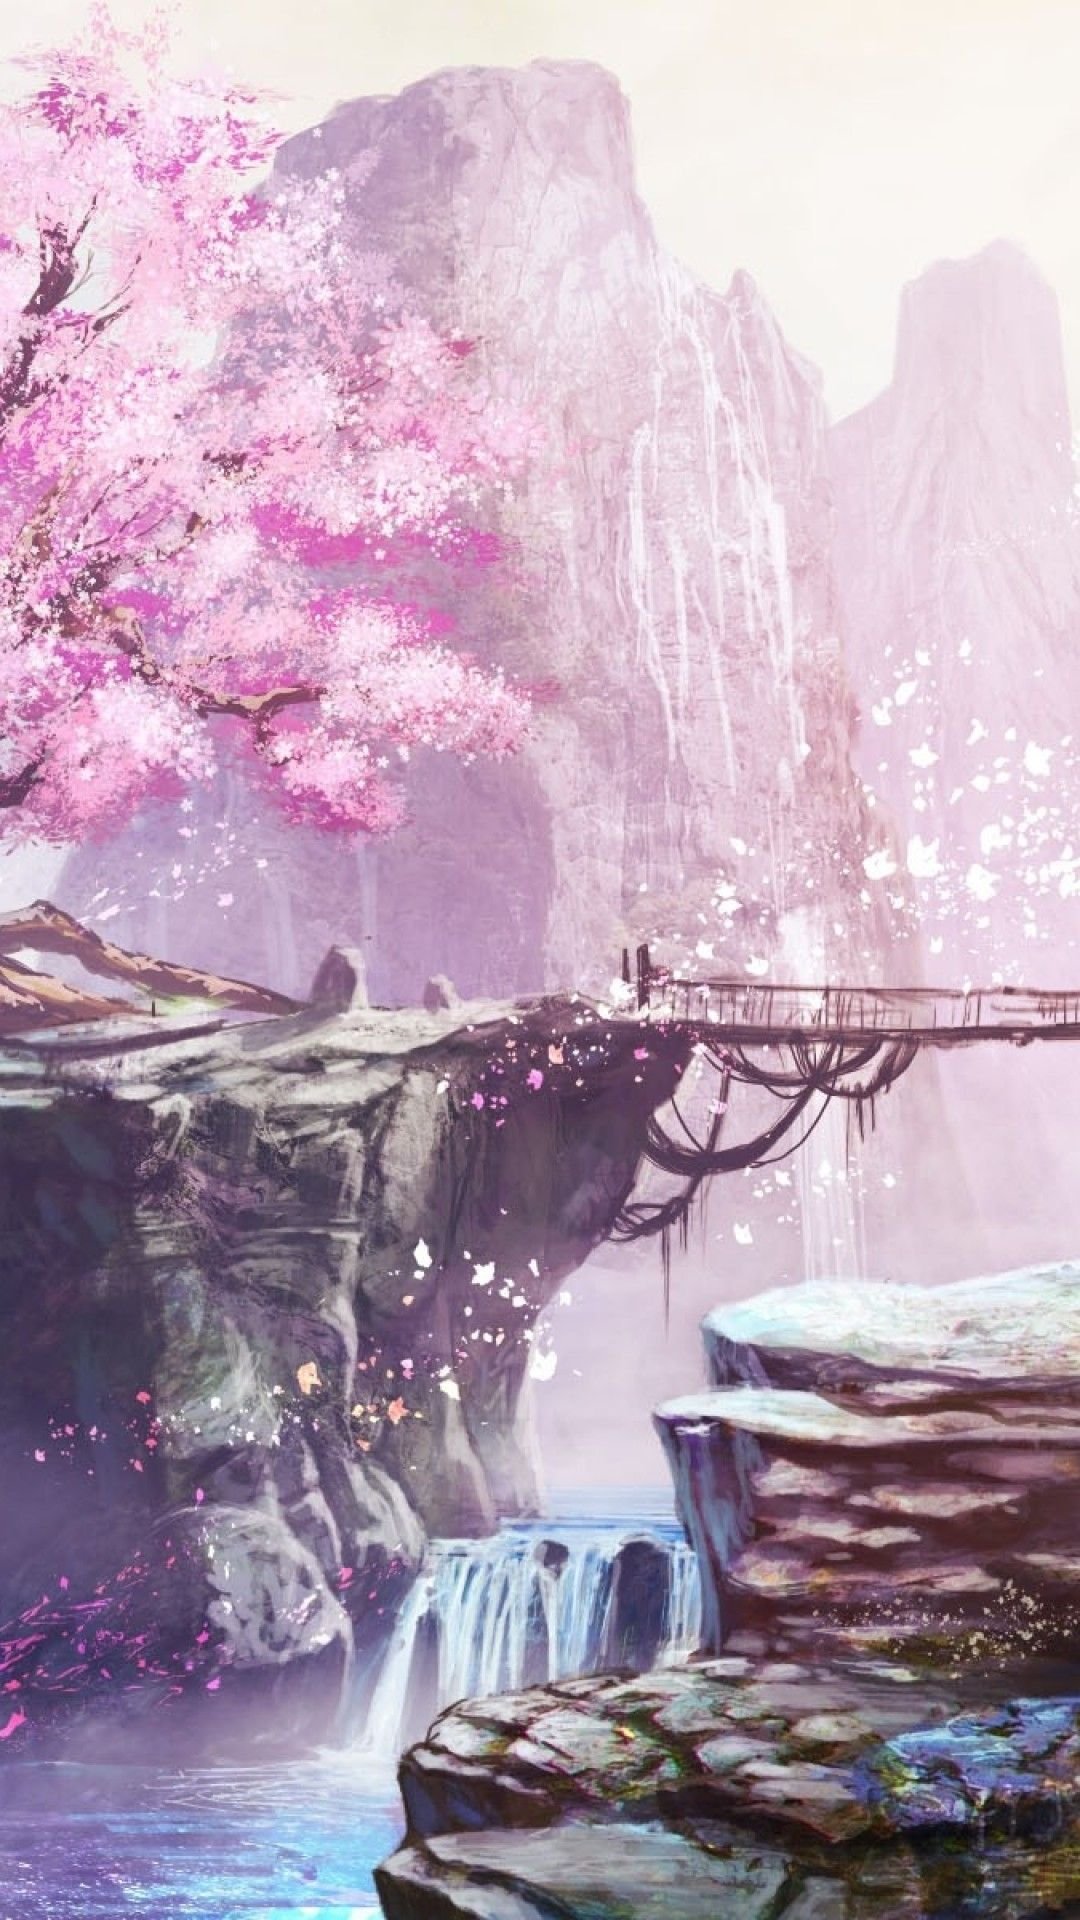 Wallpaper Anime Animegirl Cherry Blossom Blossom Tree Background   Download Free Image